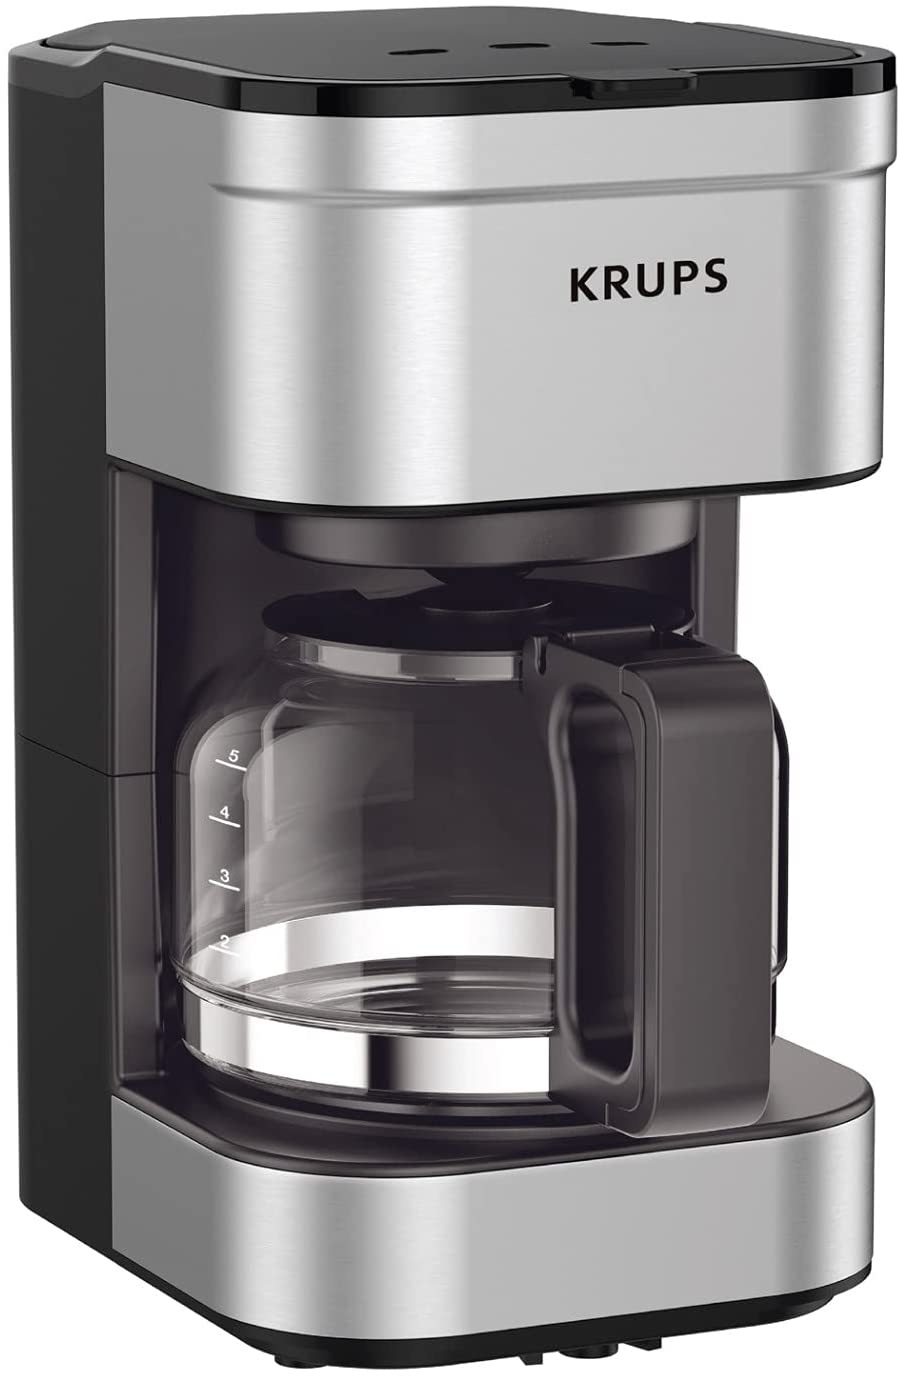 KRUPS Simply Brew Coffee Maker